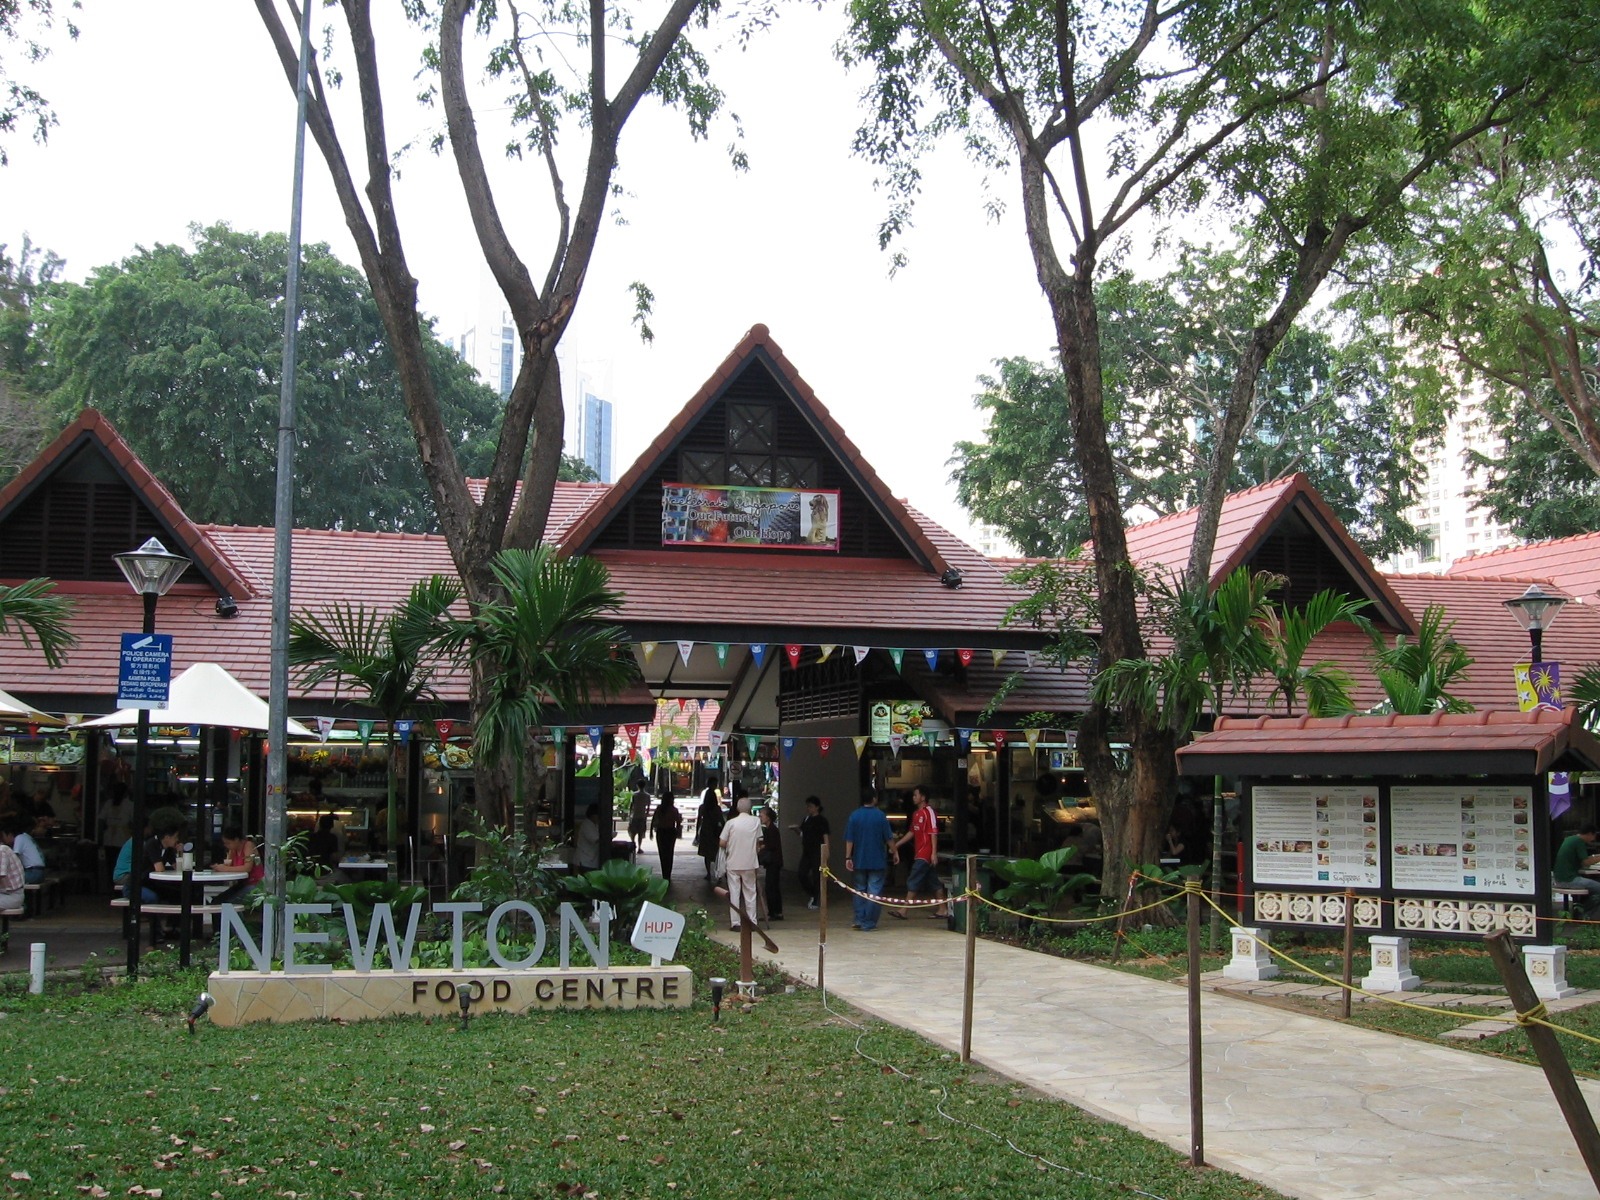 Main entrance of Newton Food Center